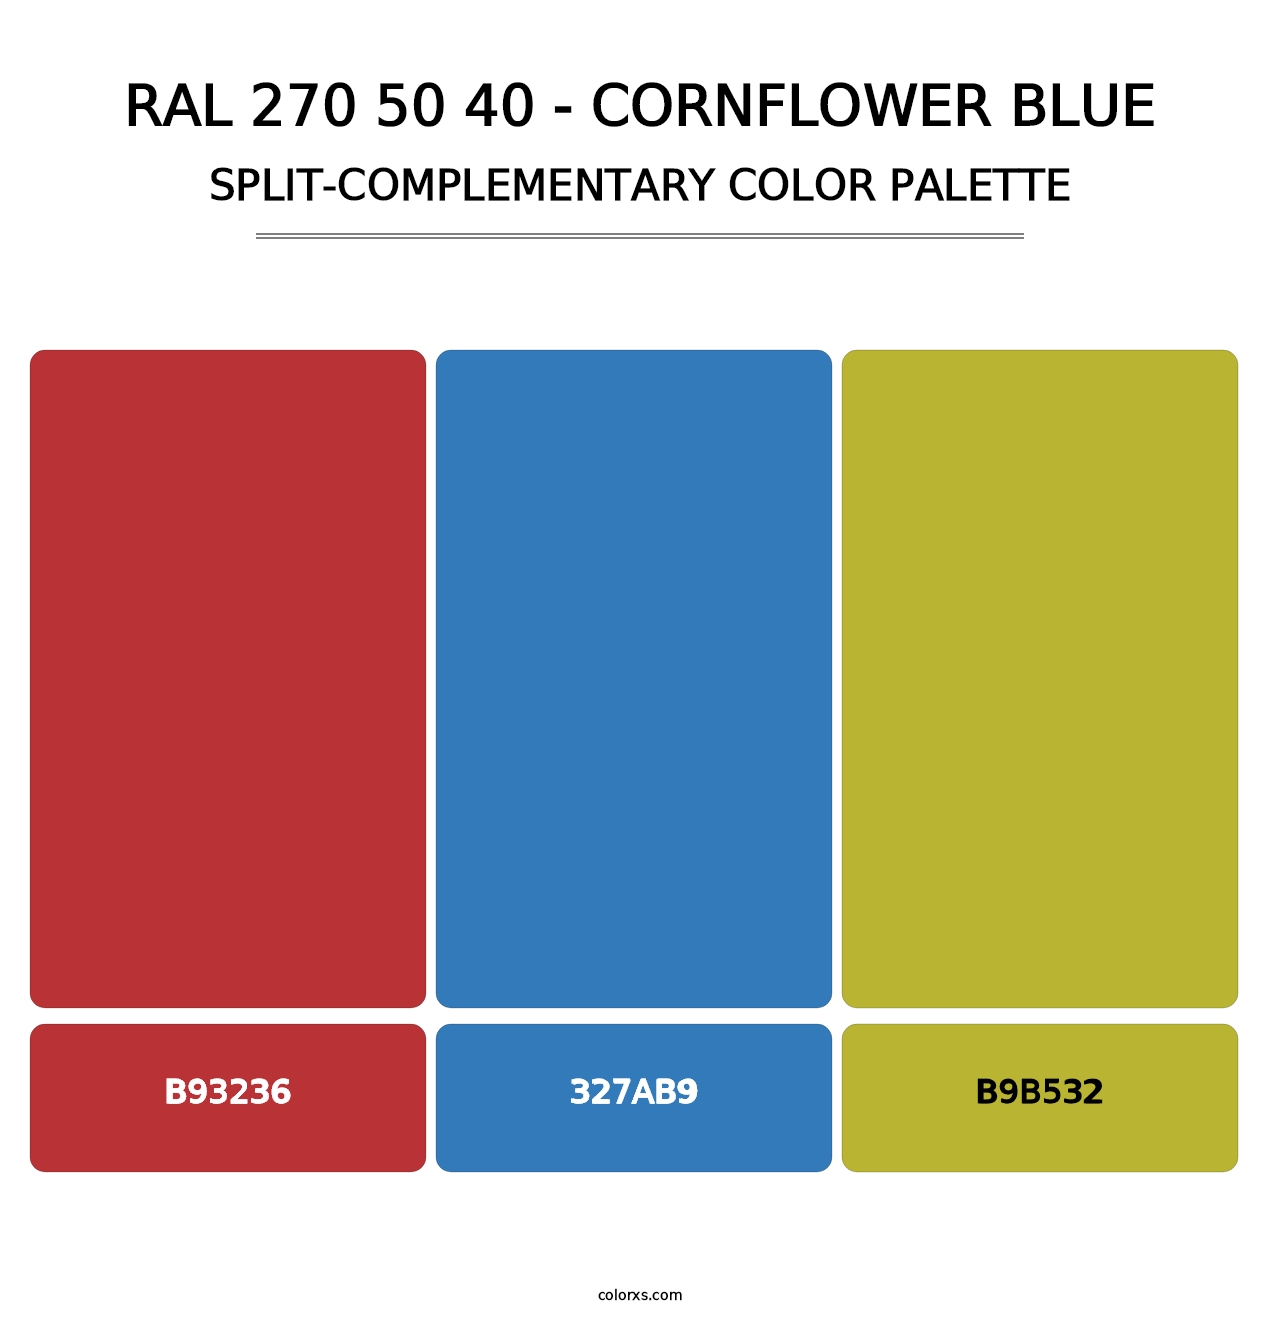 RAL 270 50 40 - Cornflower Blue - Split-Complementary Color Palette